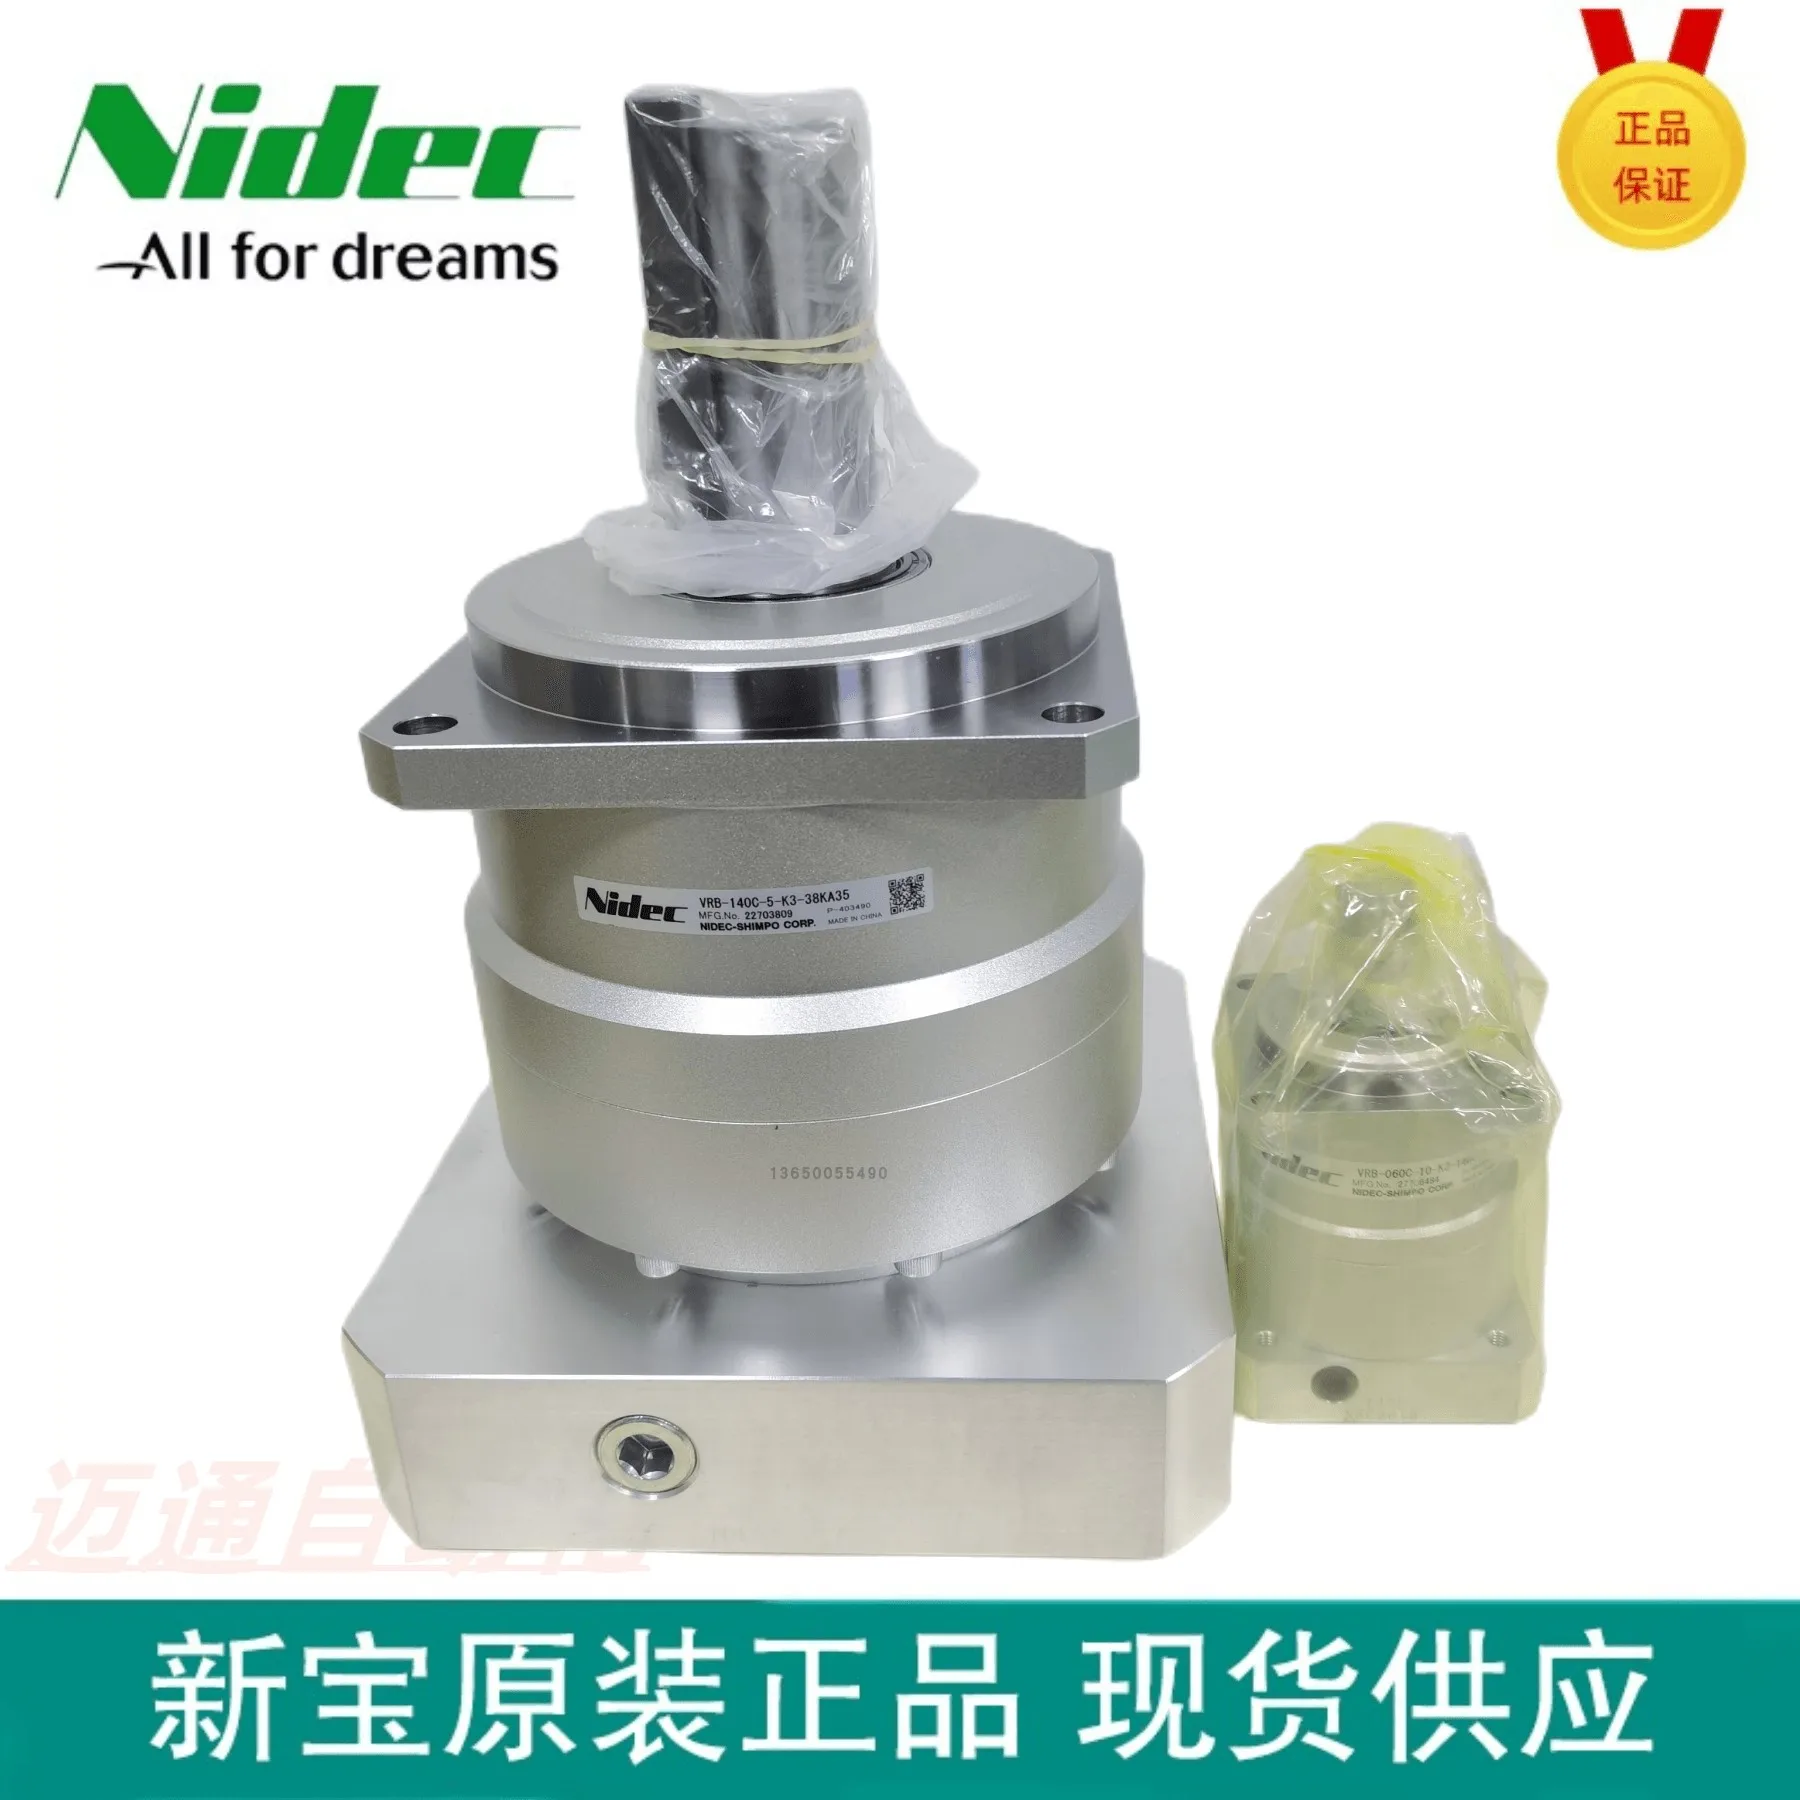 

NIDEC Xinbao Reducer VRB-140C-5-K3-38KA35 Precision Reducer Spot Sales